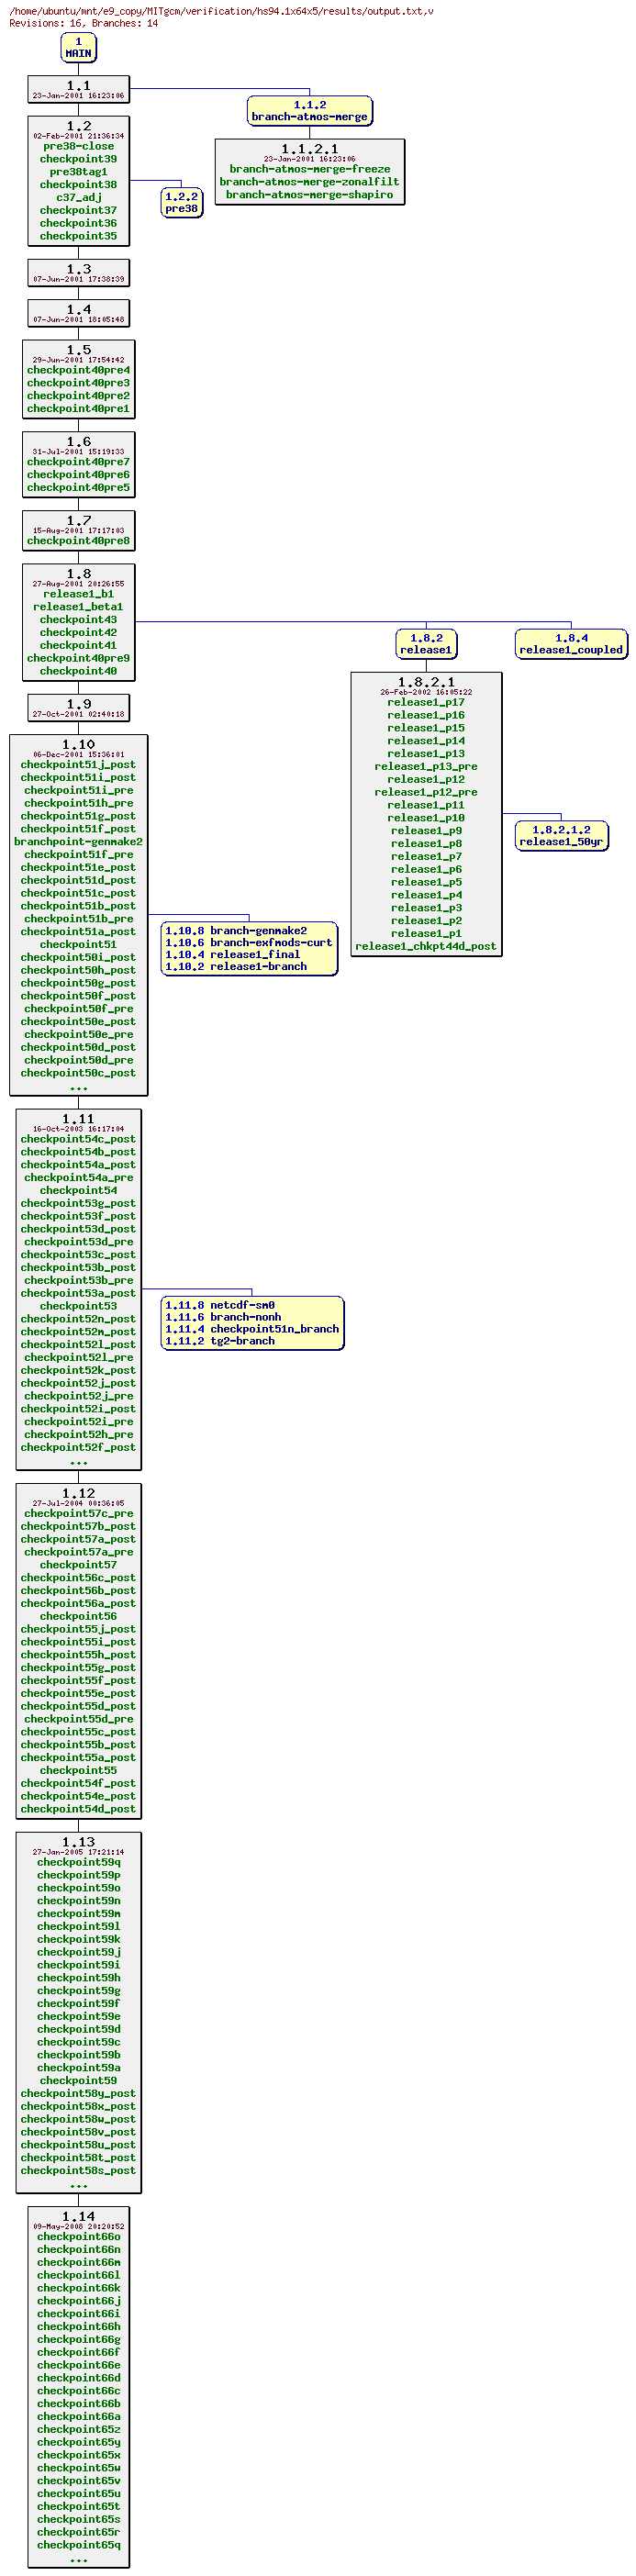 Revisions of MITgcm/verification/hs94.1x64x5/results/output.txt